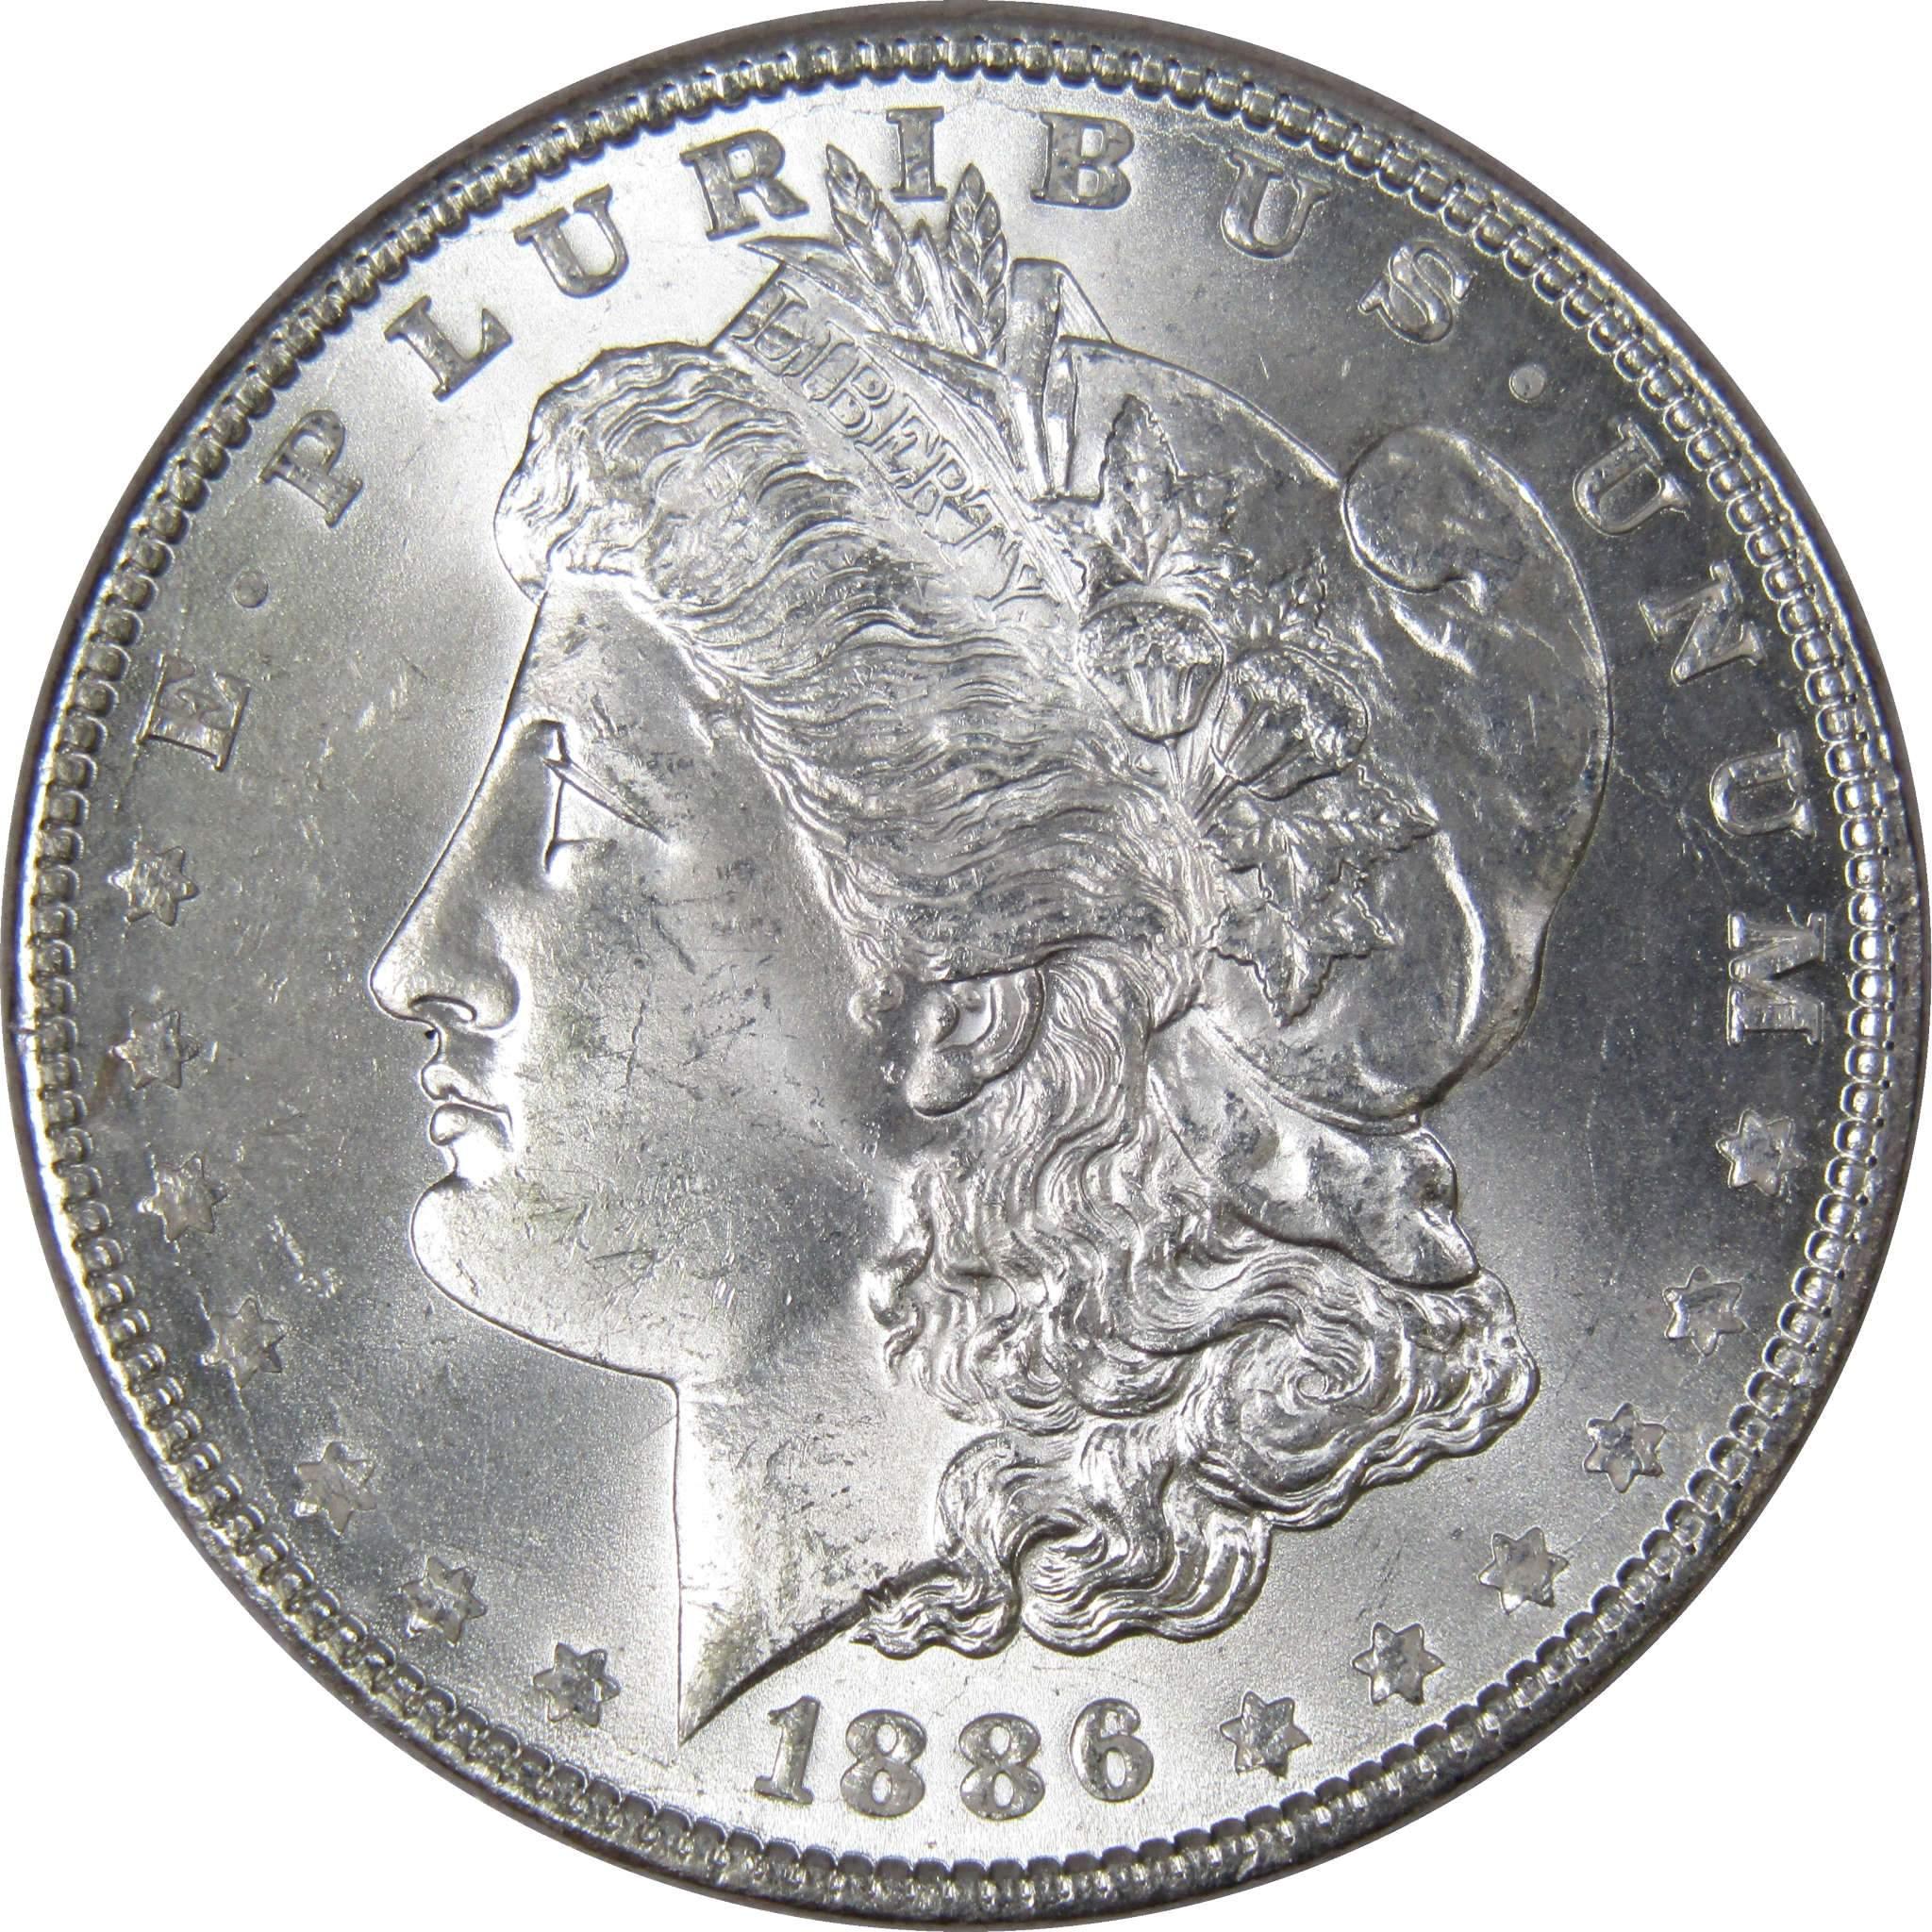 1886 Morgan Dollar BU Very Choice Uncirculated Mint State 90% Silver $1 US Coin - Morgan coin - Morgan silver dollar - Morgan silver dollar for sale - Profile Coins &amp; Collectibles